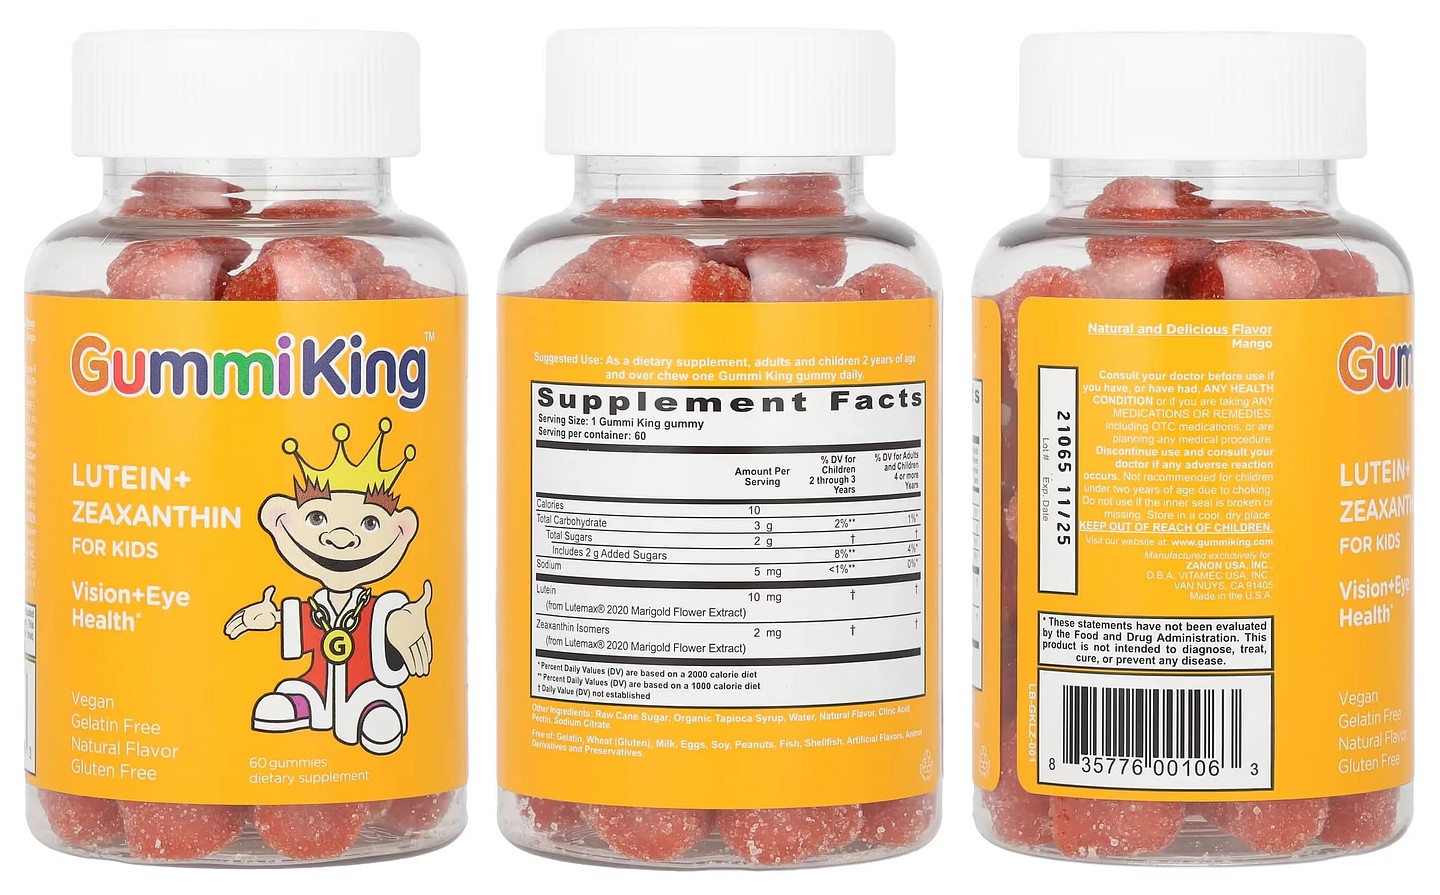 GummiKing, Lutein + Zeaxanthin Gummies for Kids packaging